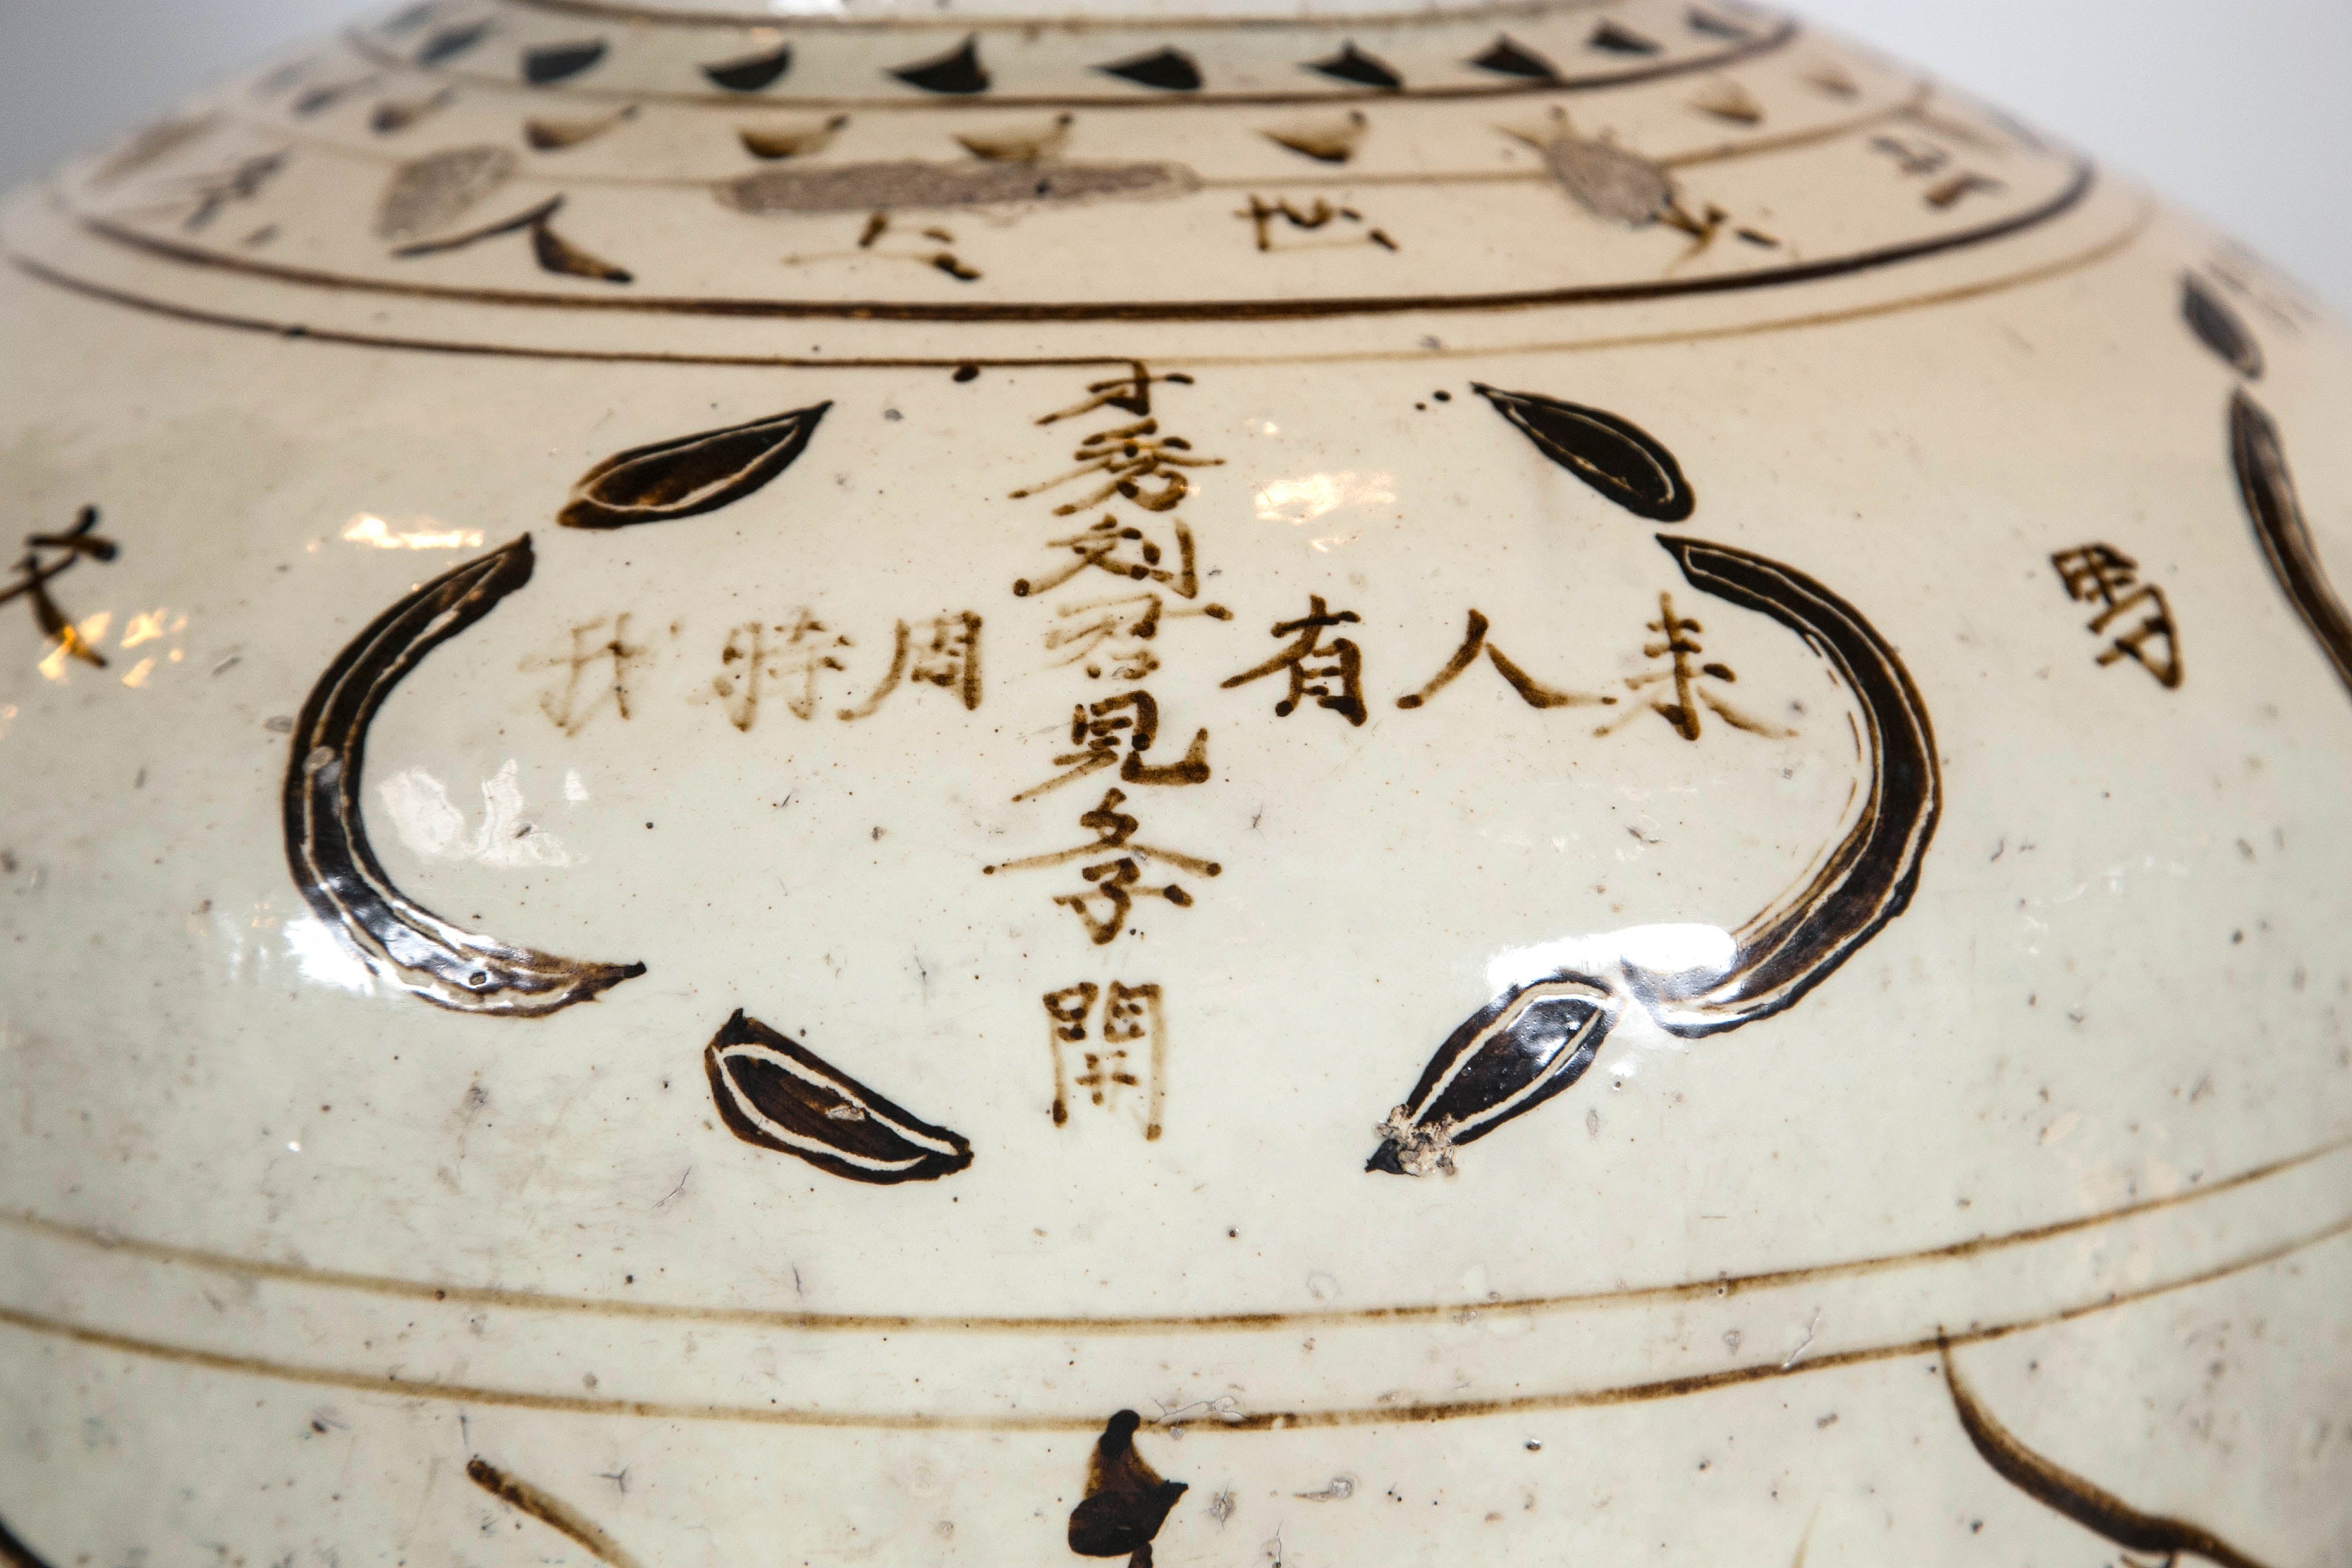 Antique Chinese pottery storage jar.